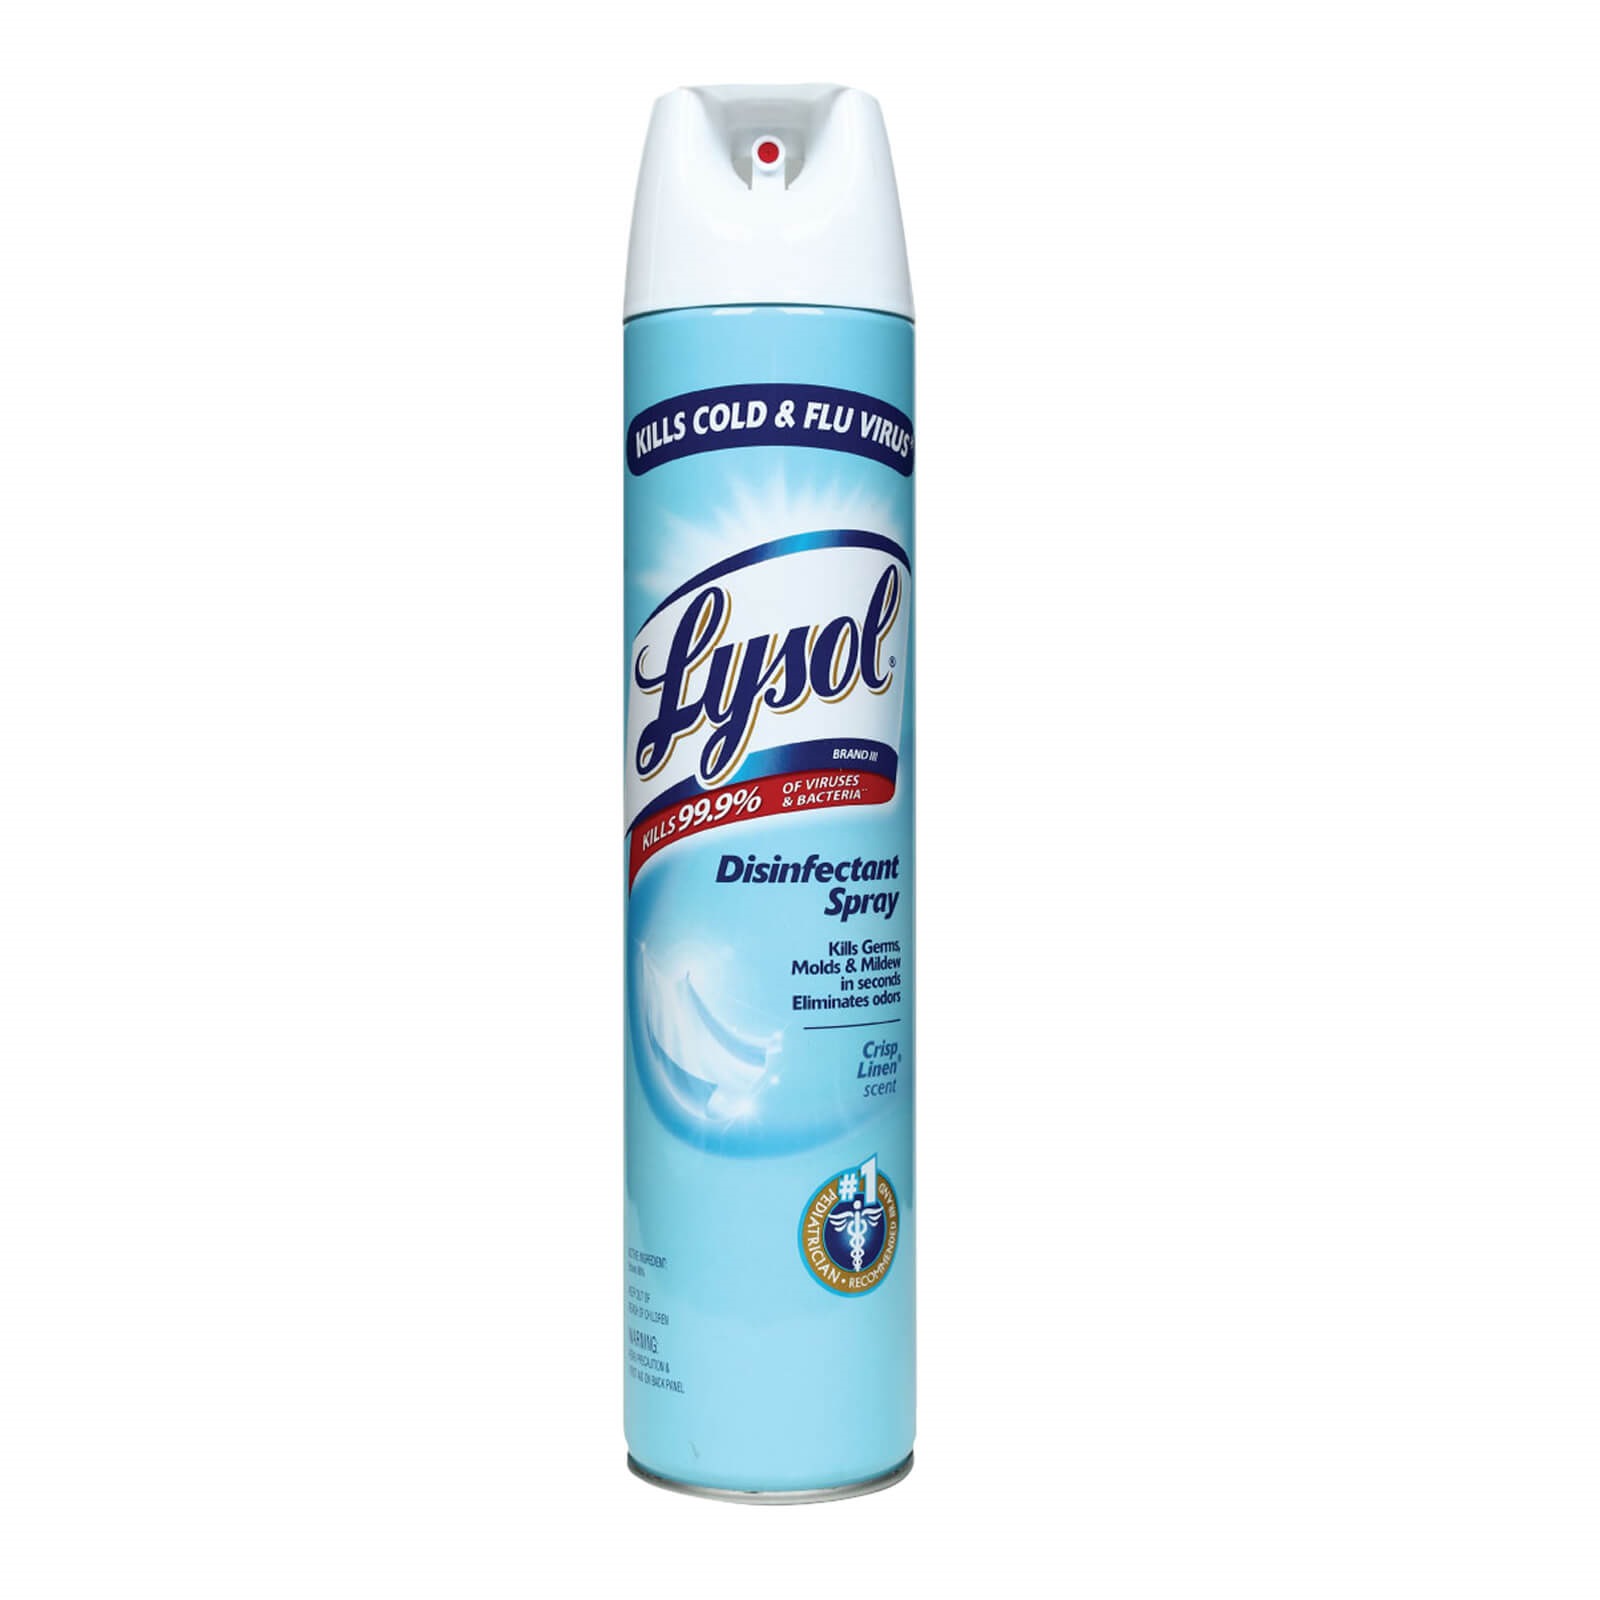 Lysol - Disinfectant Spray Crisp Linen 510g